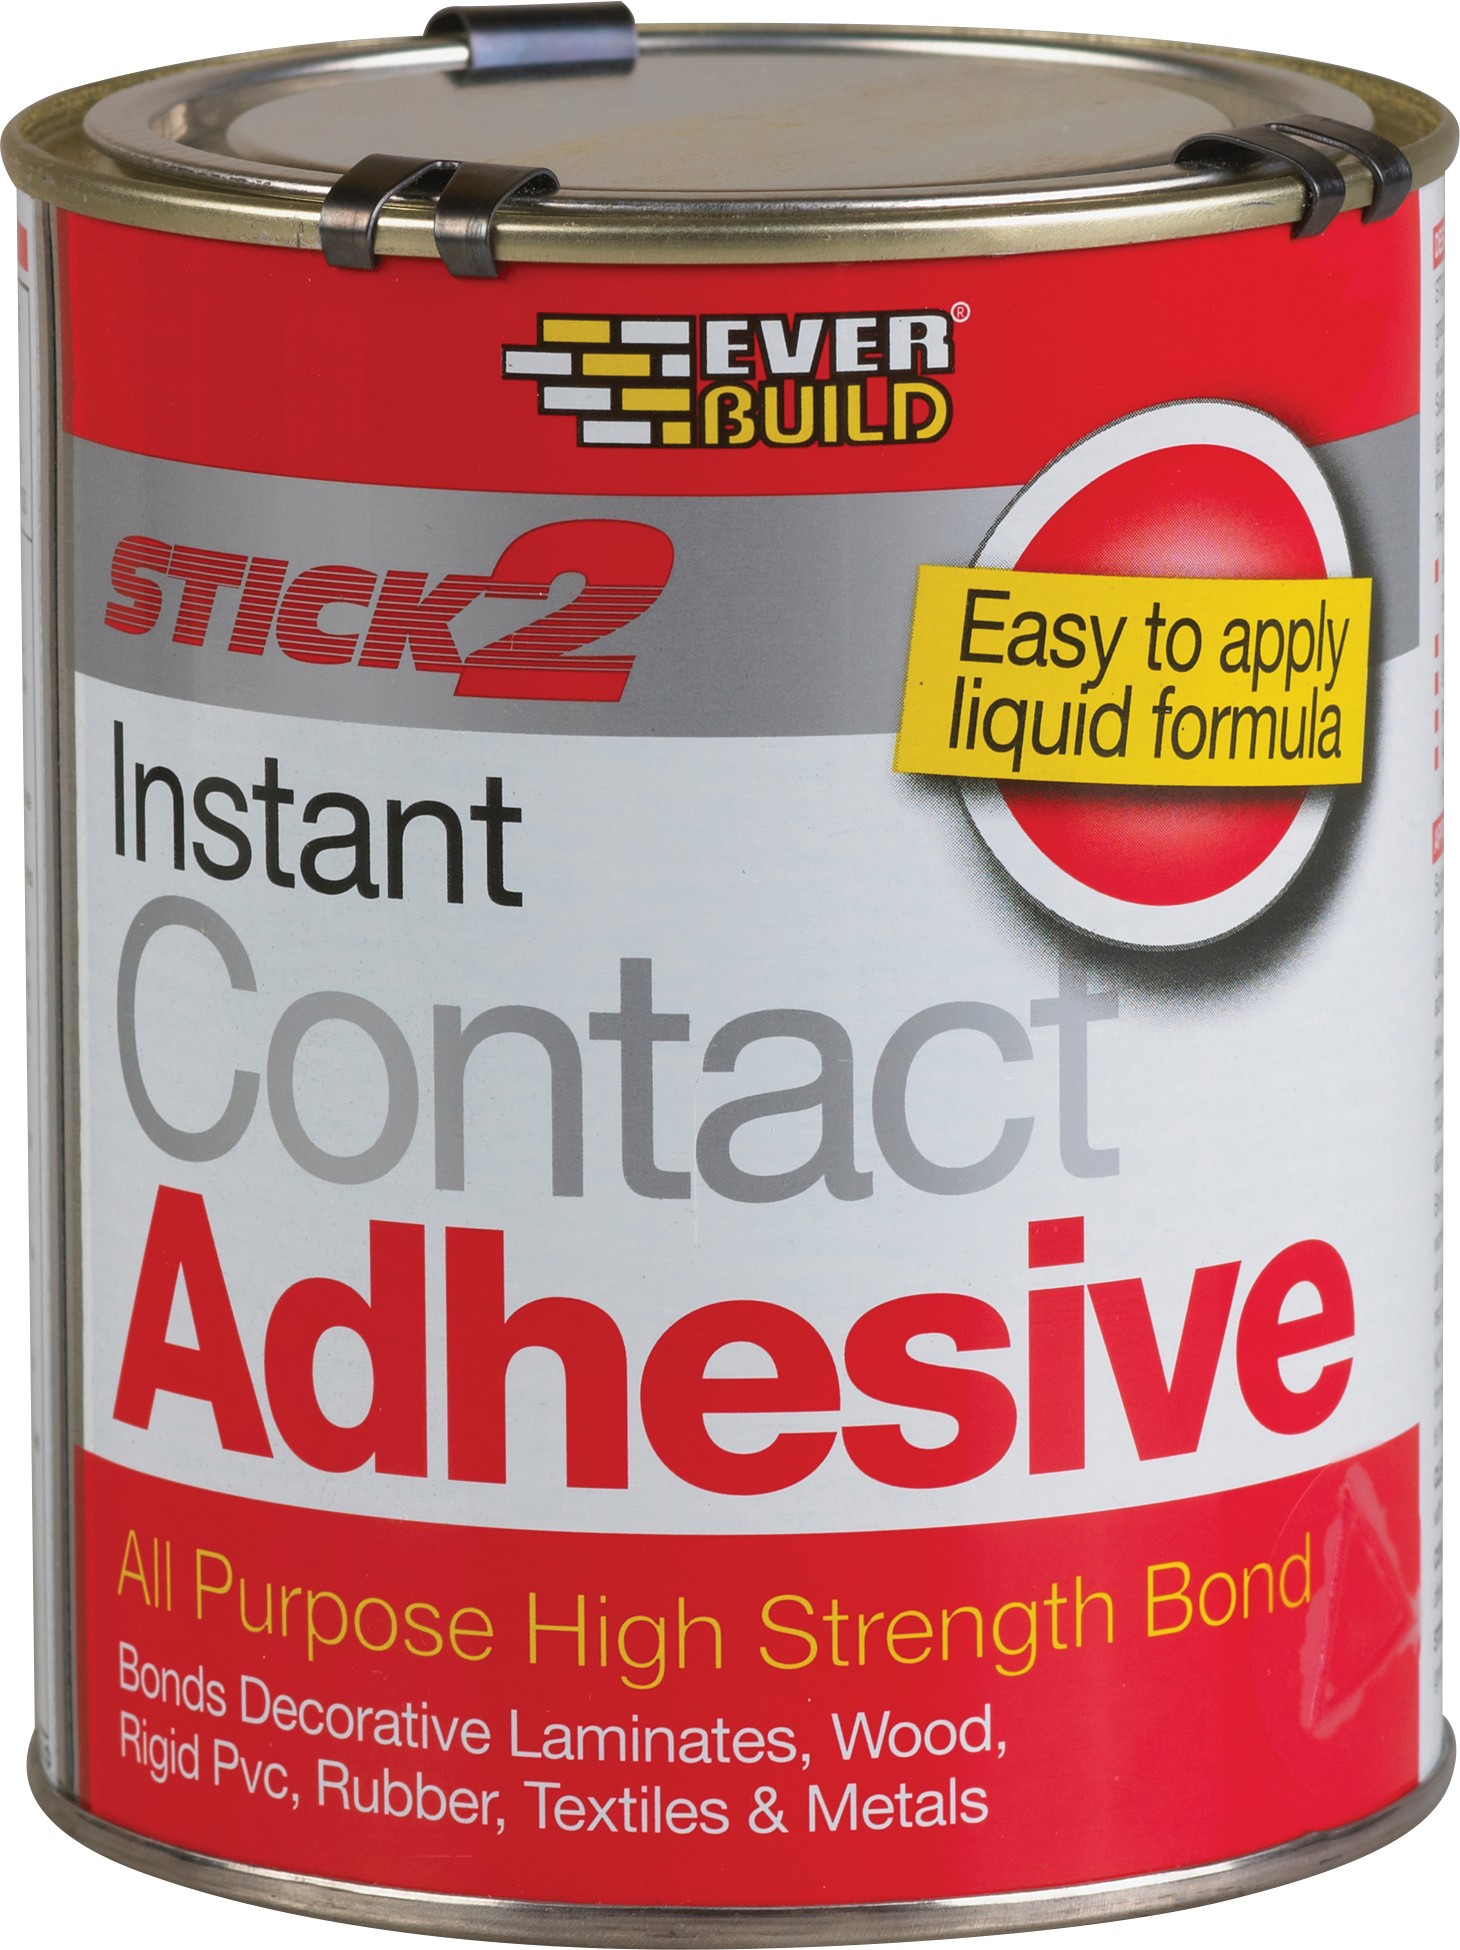 SikaEverbuild Stick2 All Purpose Contact Adhesive 750ml Beige [EVBCON750]